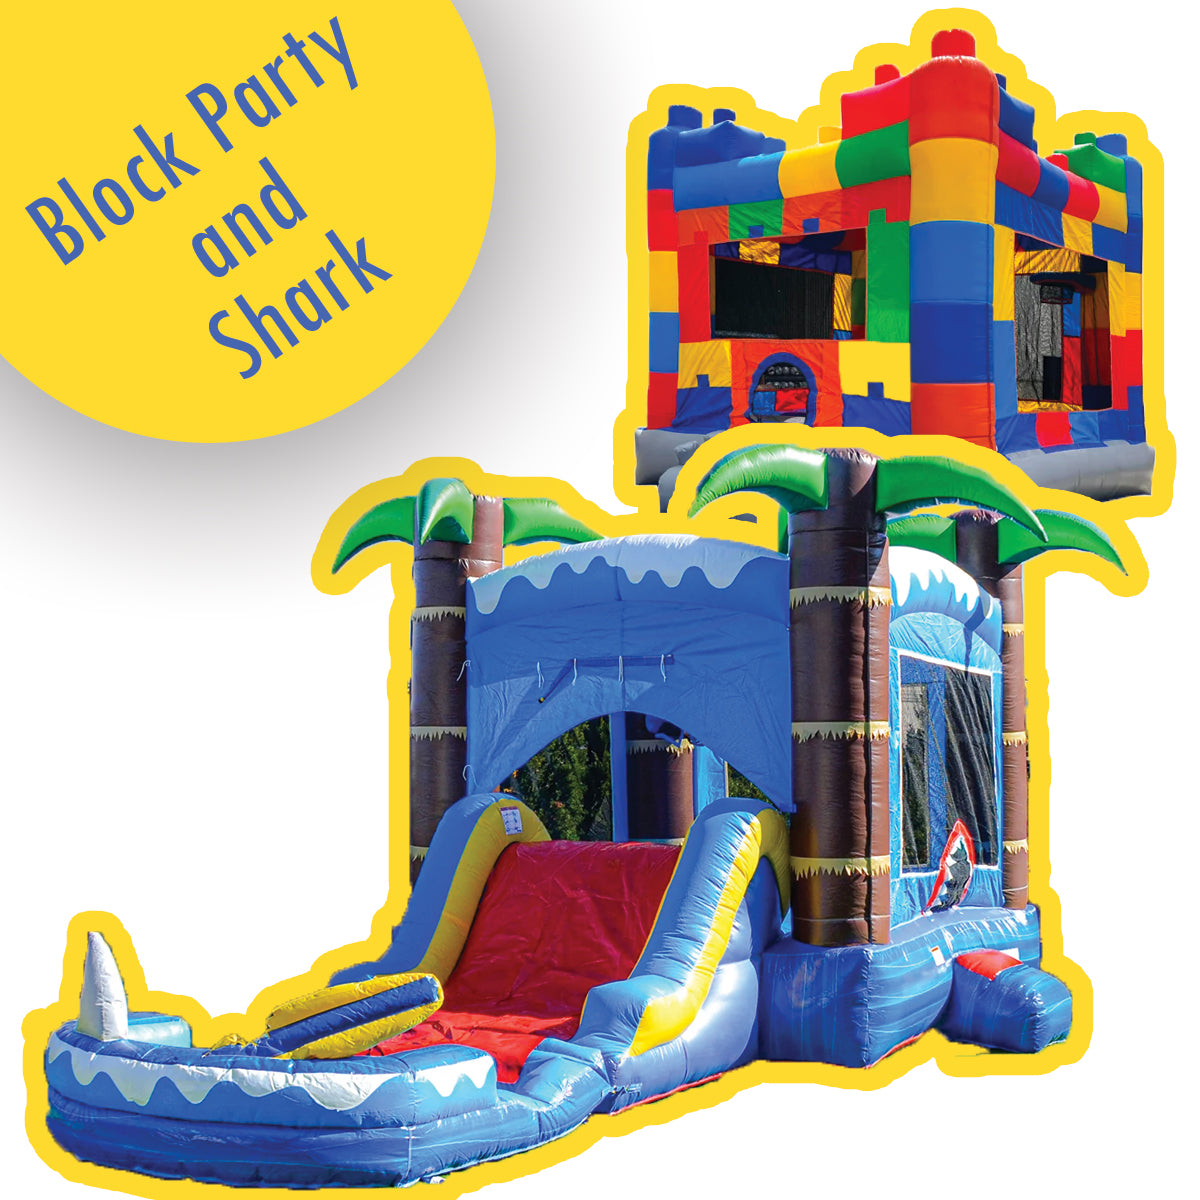 Block Party and Shark Combo Bundle